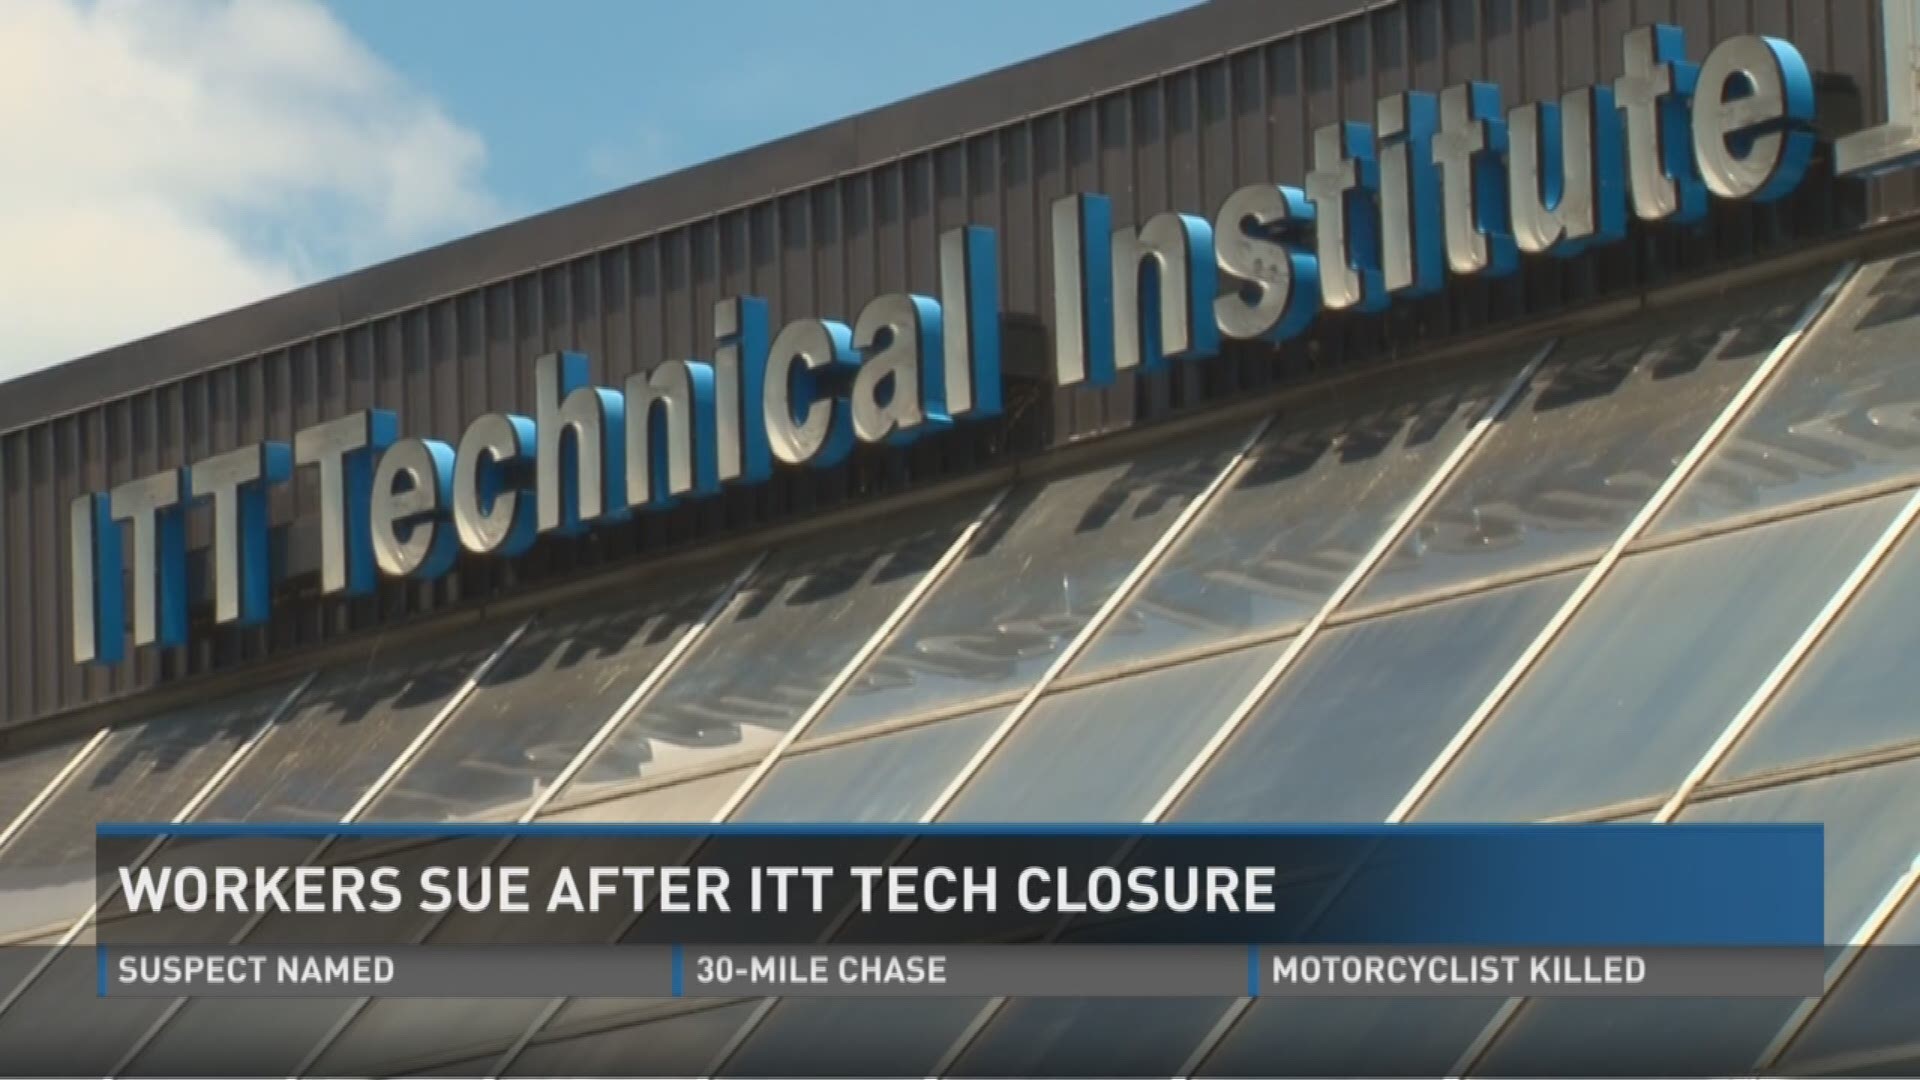 Employees file lawsuit against ITT Tech after closure | 13newsnow.com